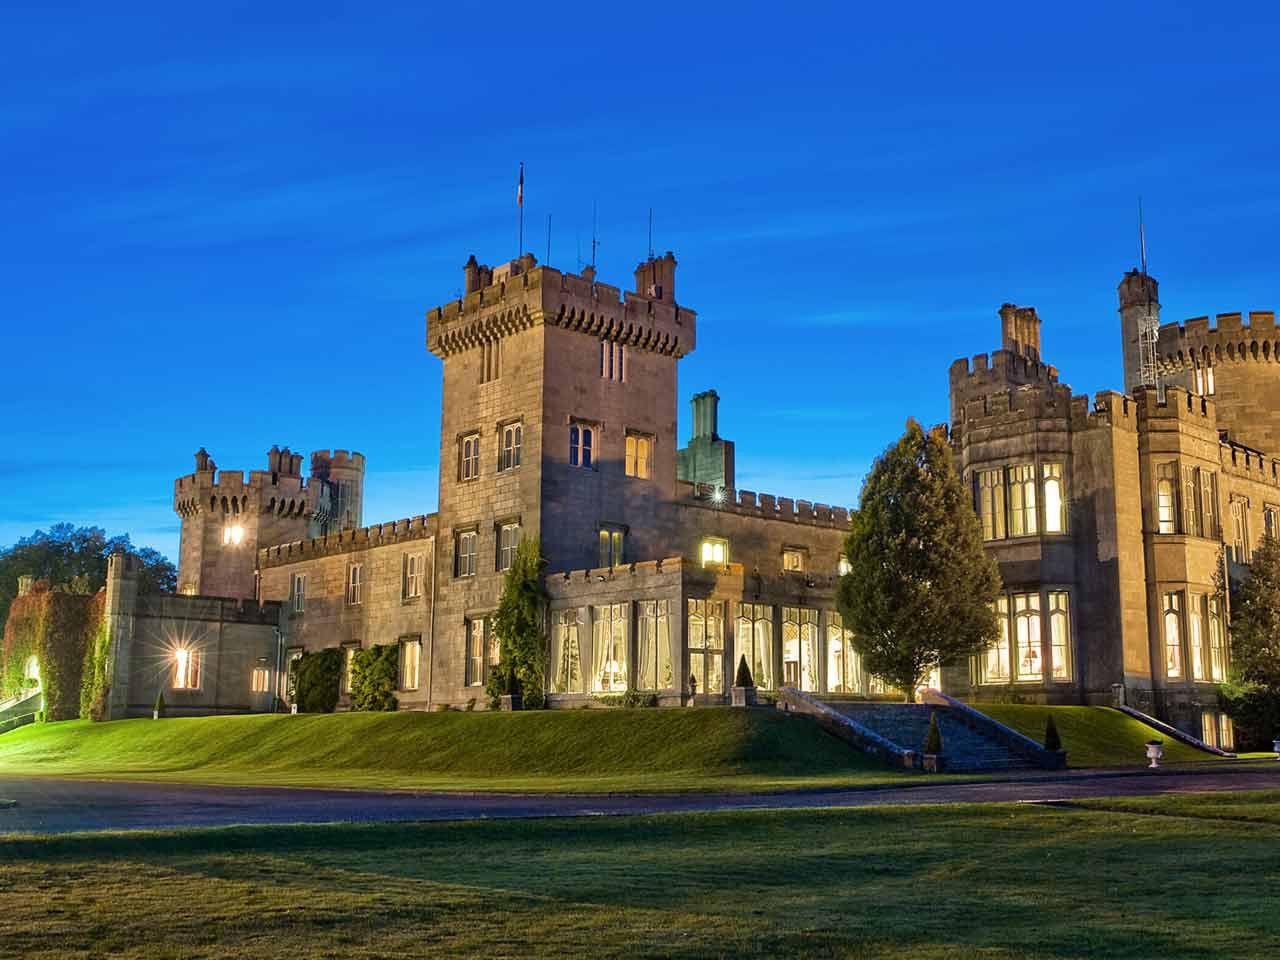 Dromoland Castle, Co. Clare